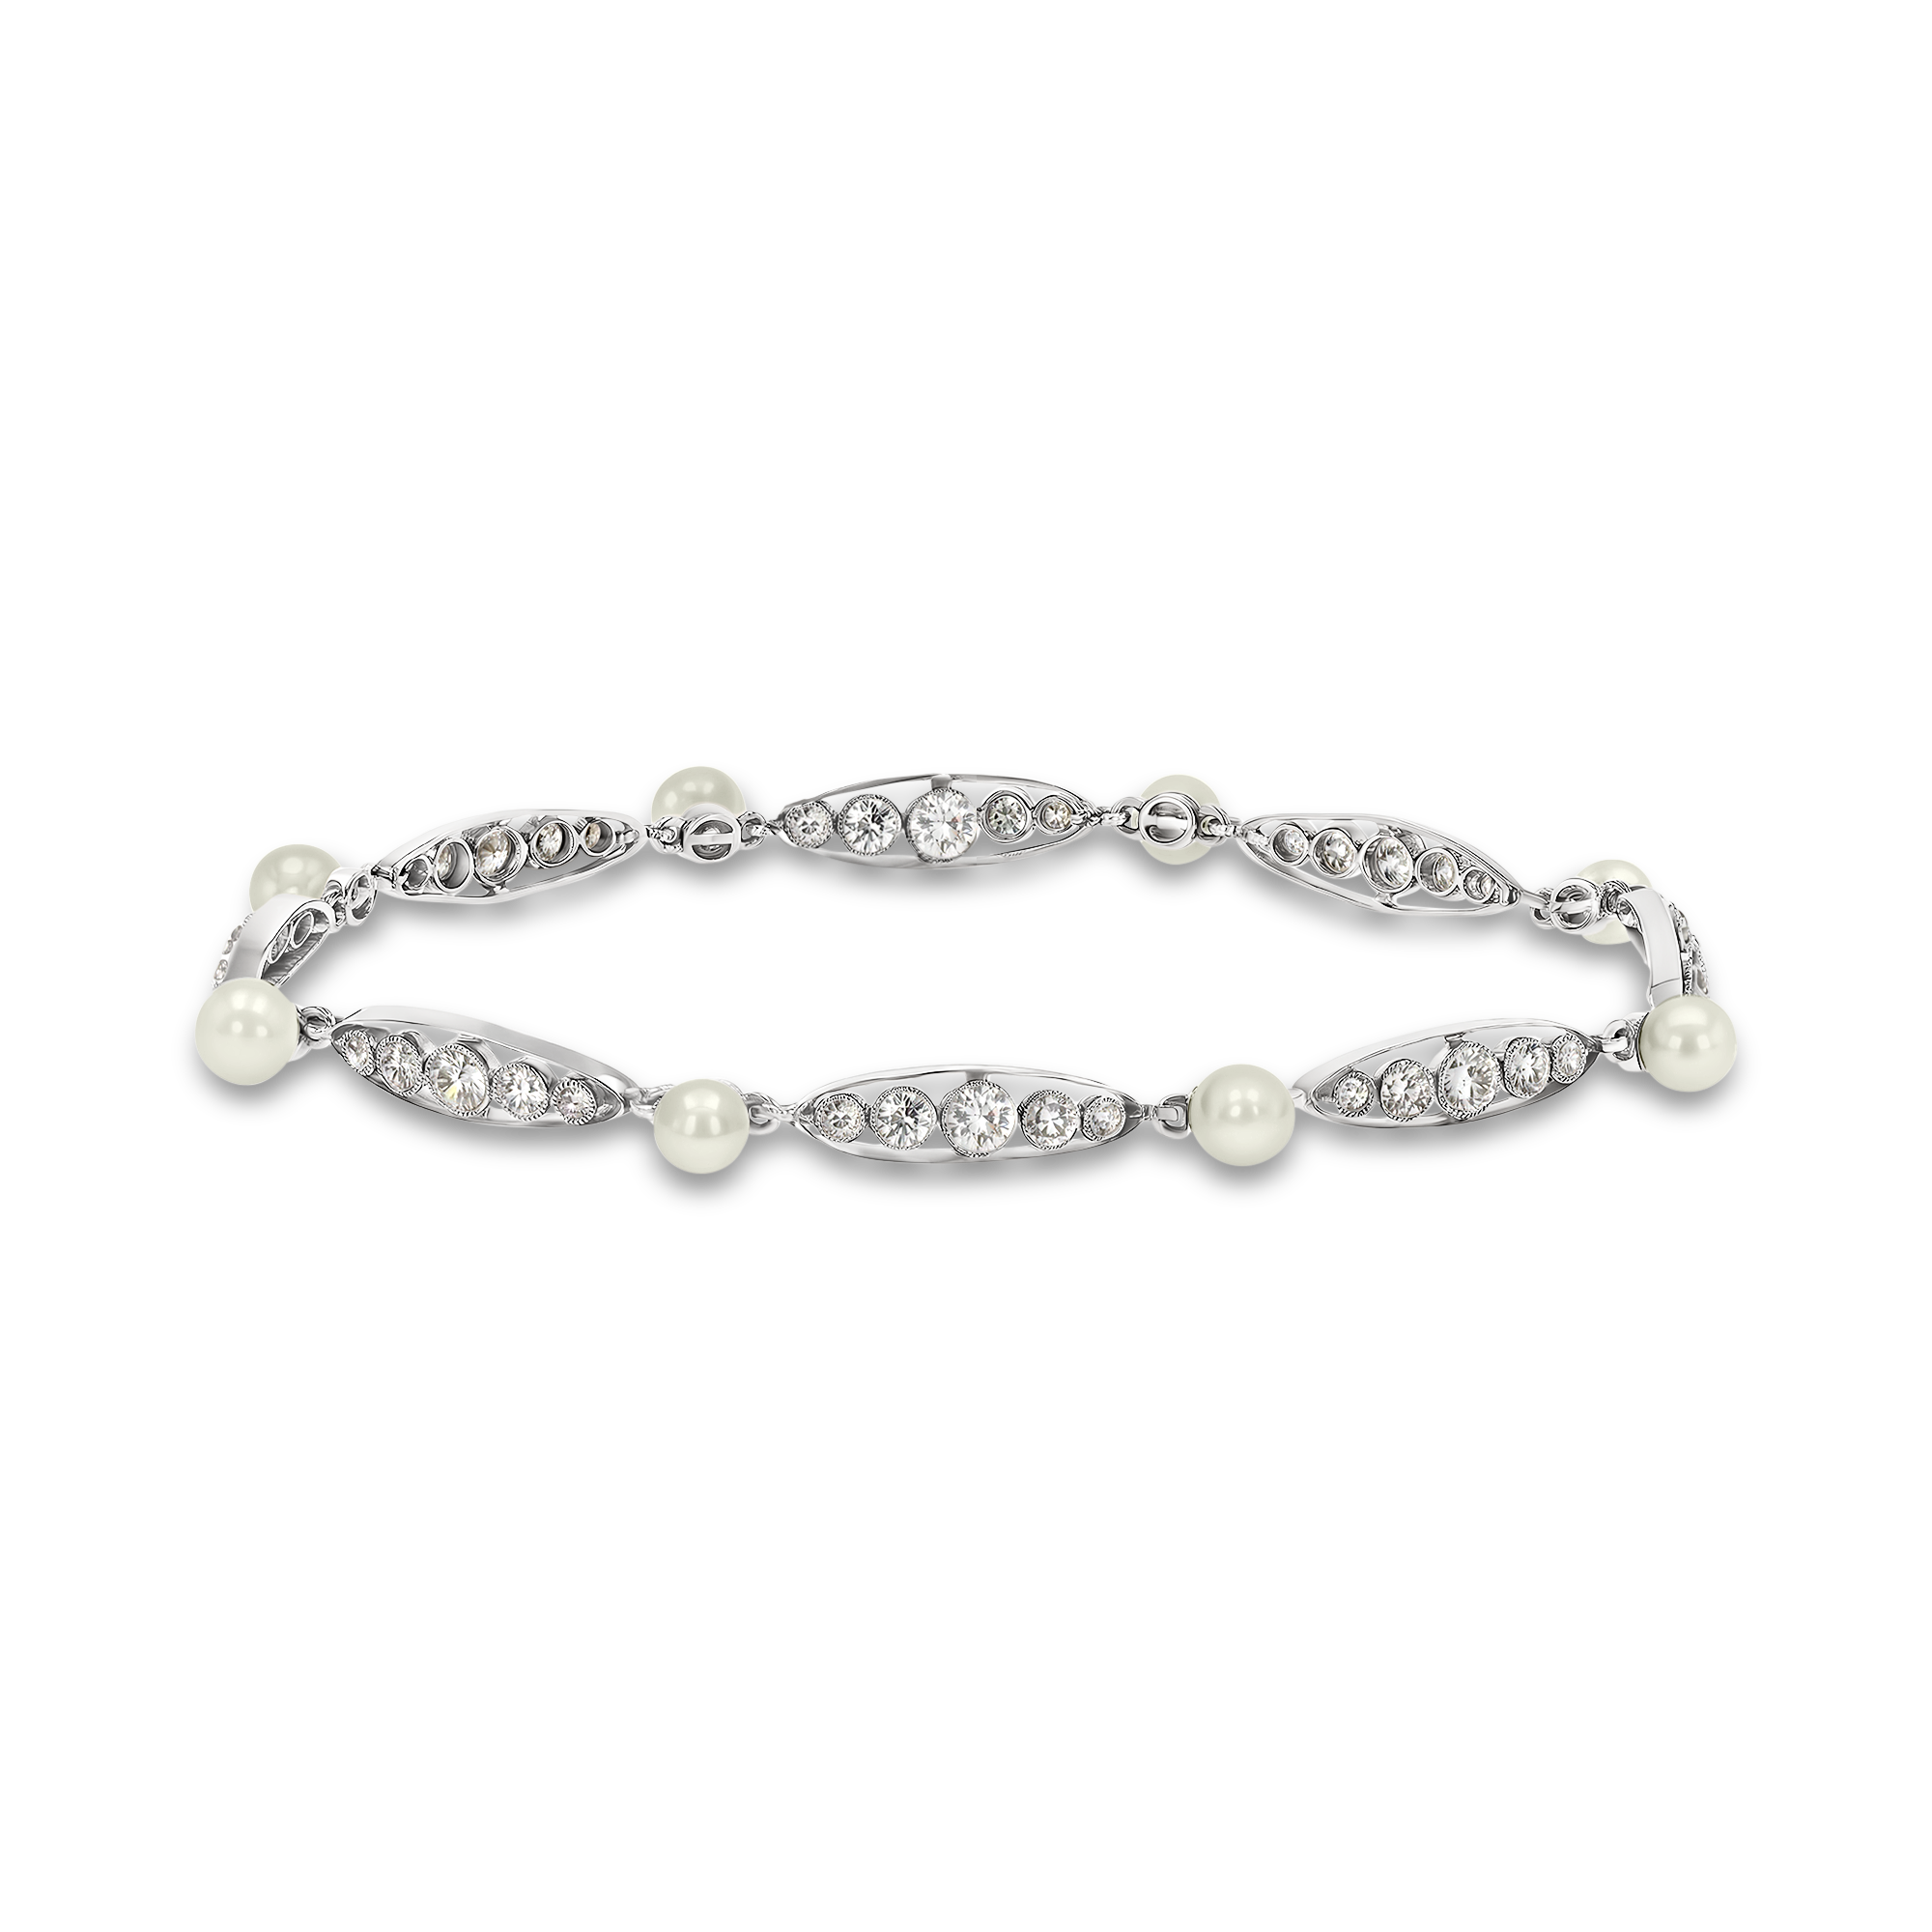 Edwardian Pearl and Diamond Bracelet Brilliant Cut, Millegrain Set_1